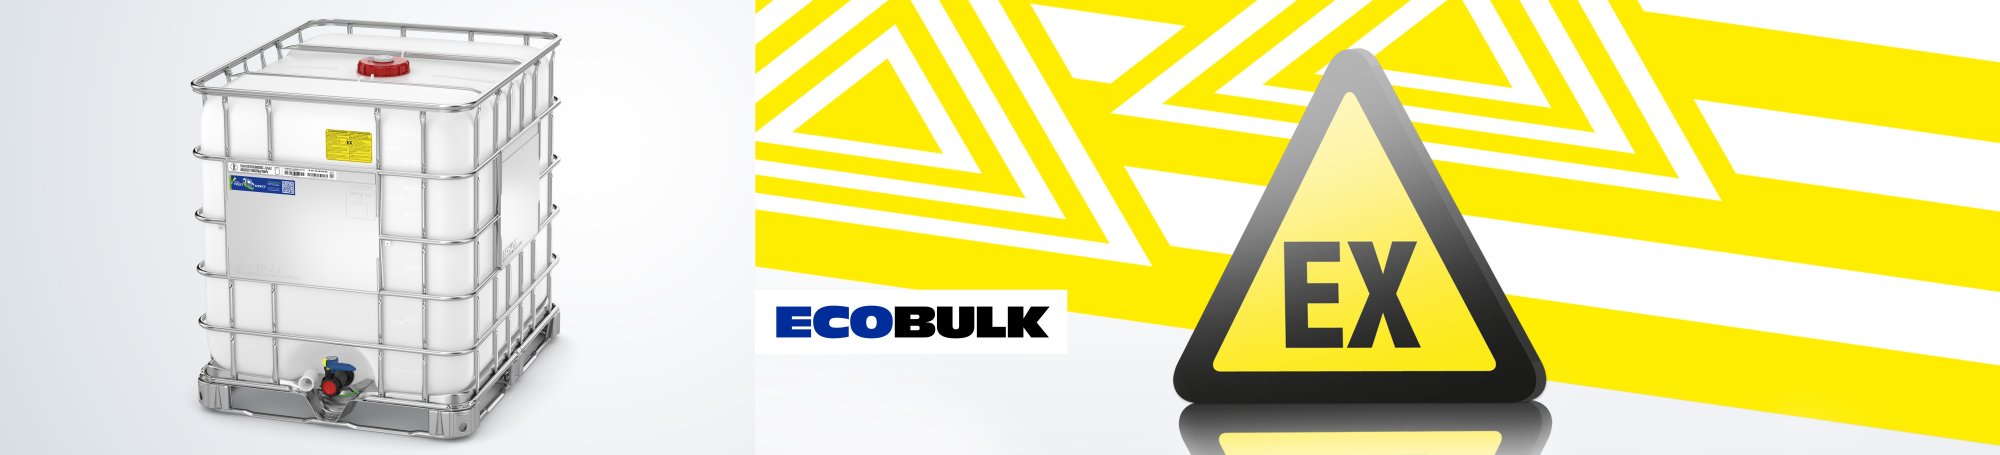 ECOBULK MX-EX antistatisch